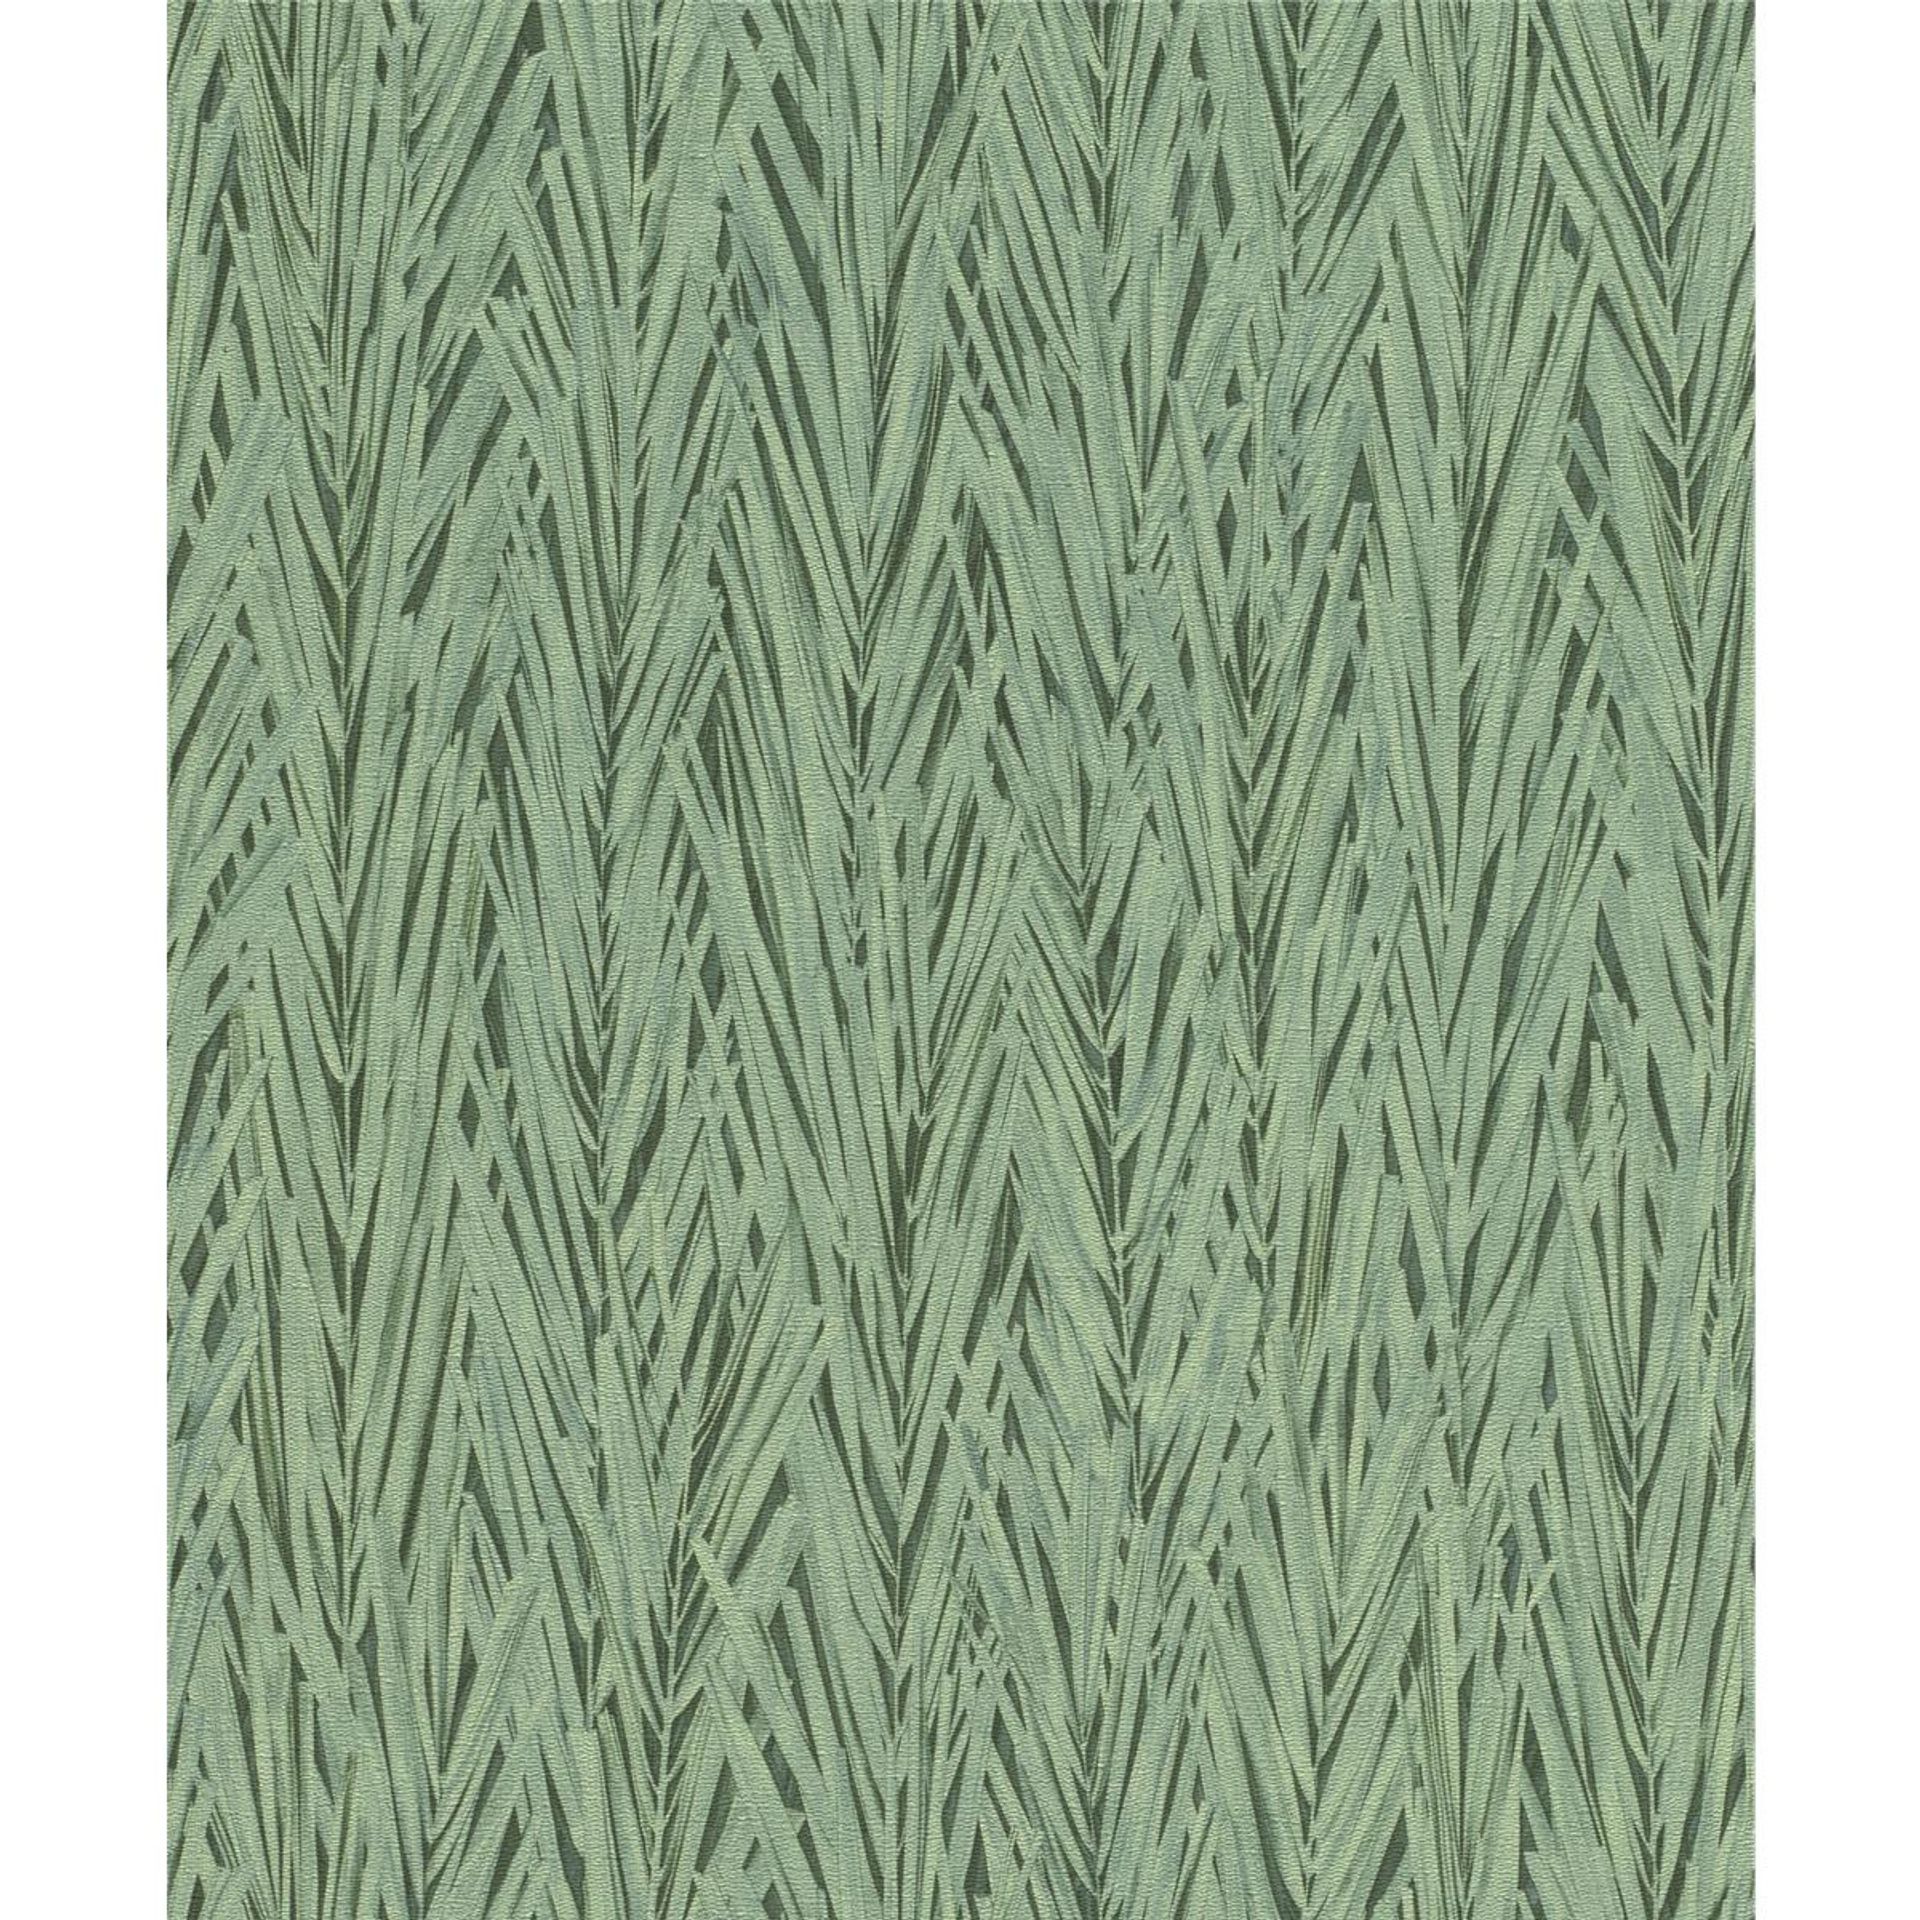 Tapete Modern floral Vinyltapete Hellgrün versetzter Ansatz 53 cm x 10,05 m